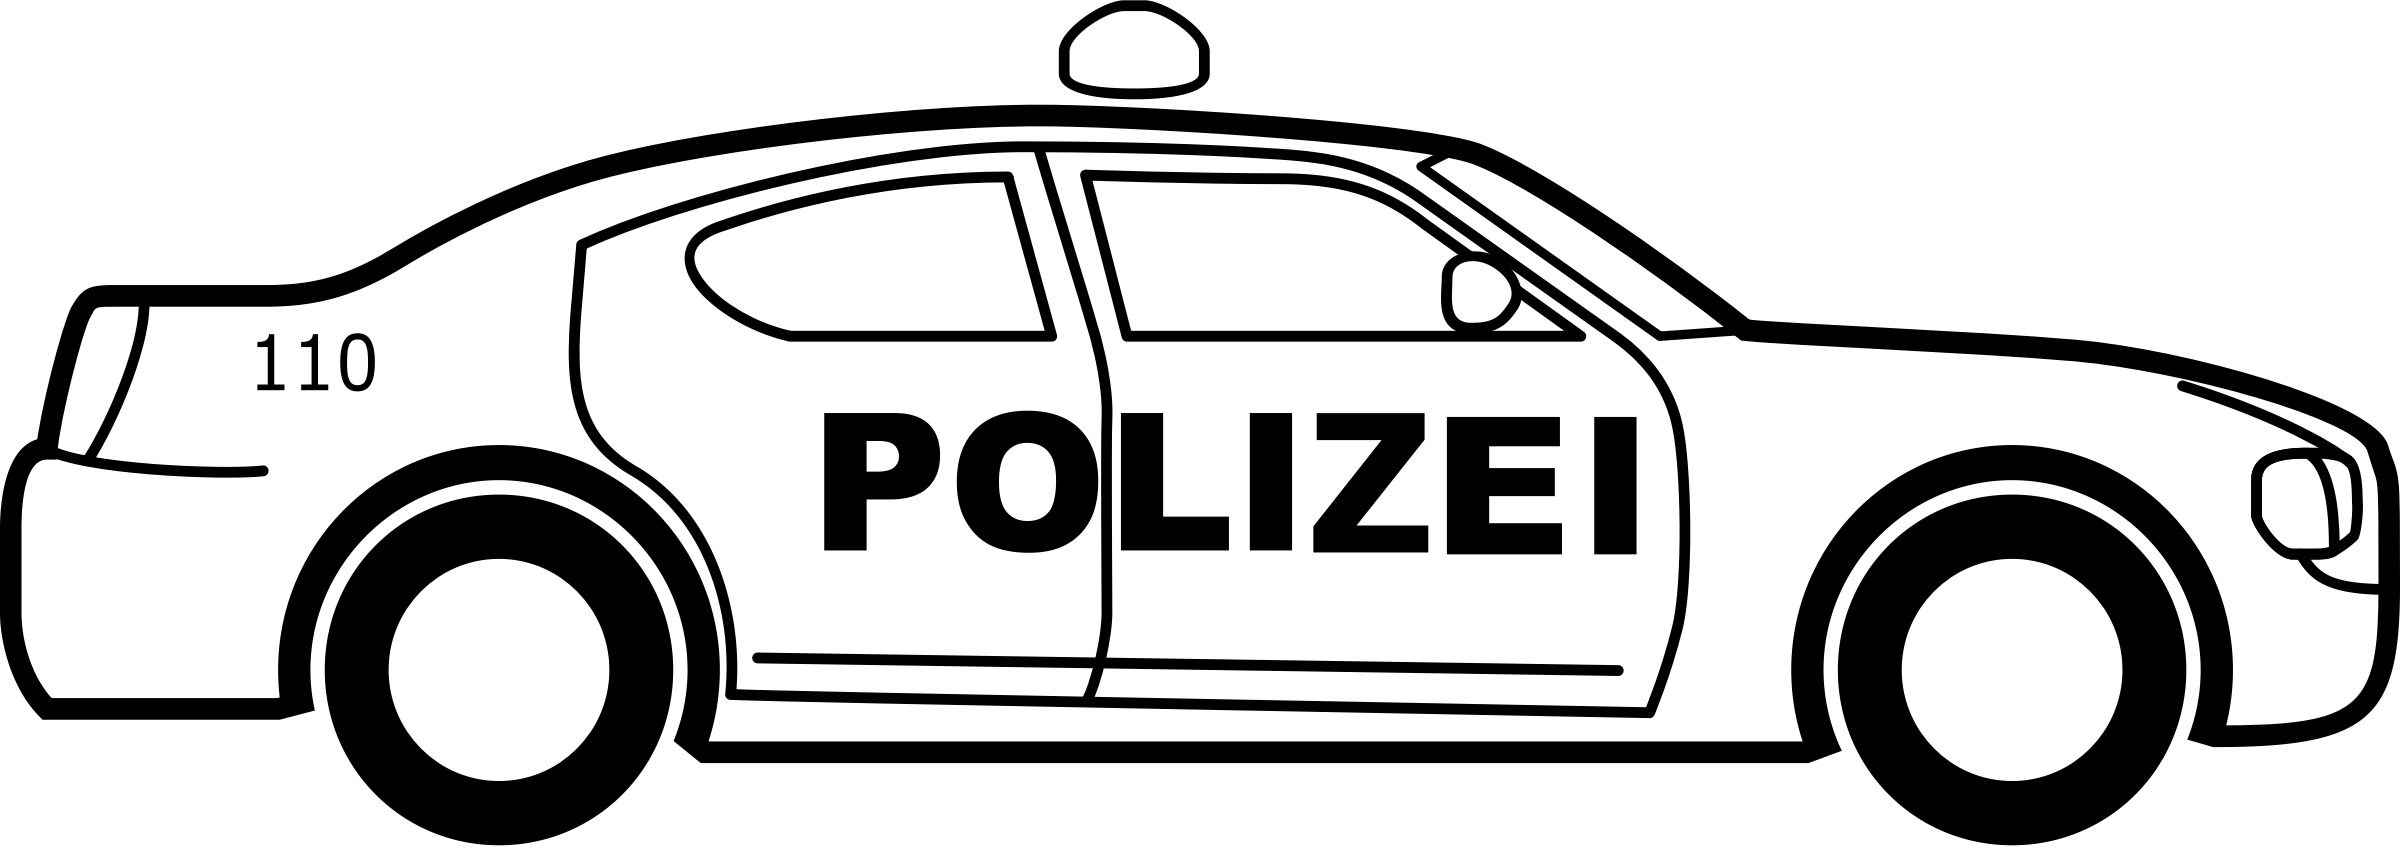 German police car big. Policeman clipart law enforcement